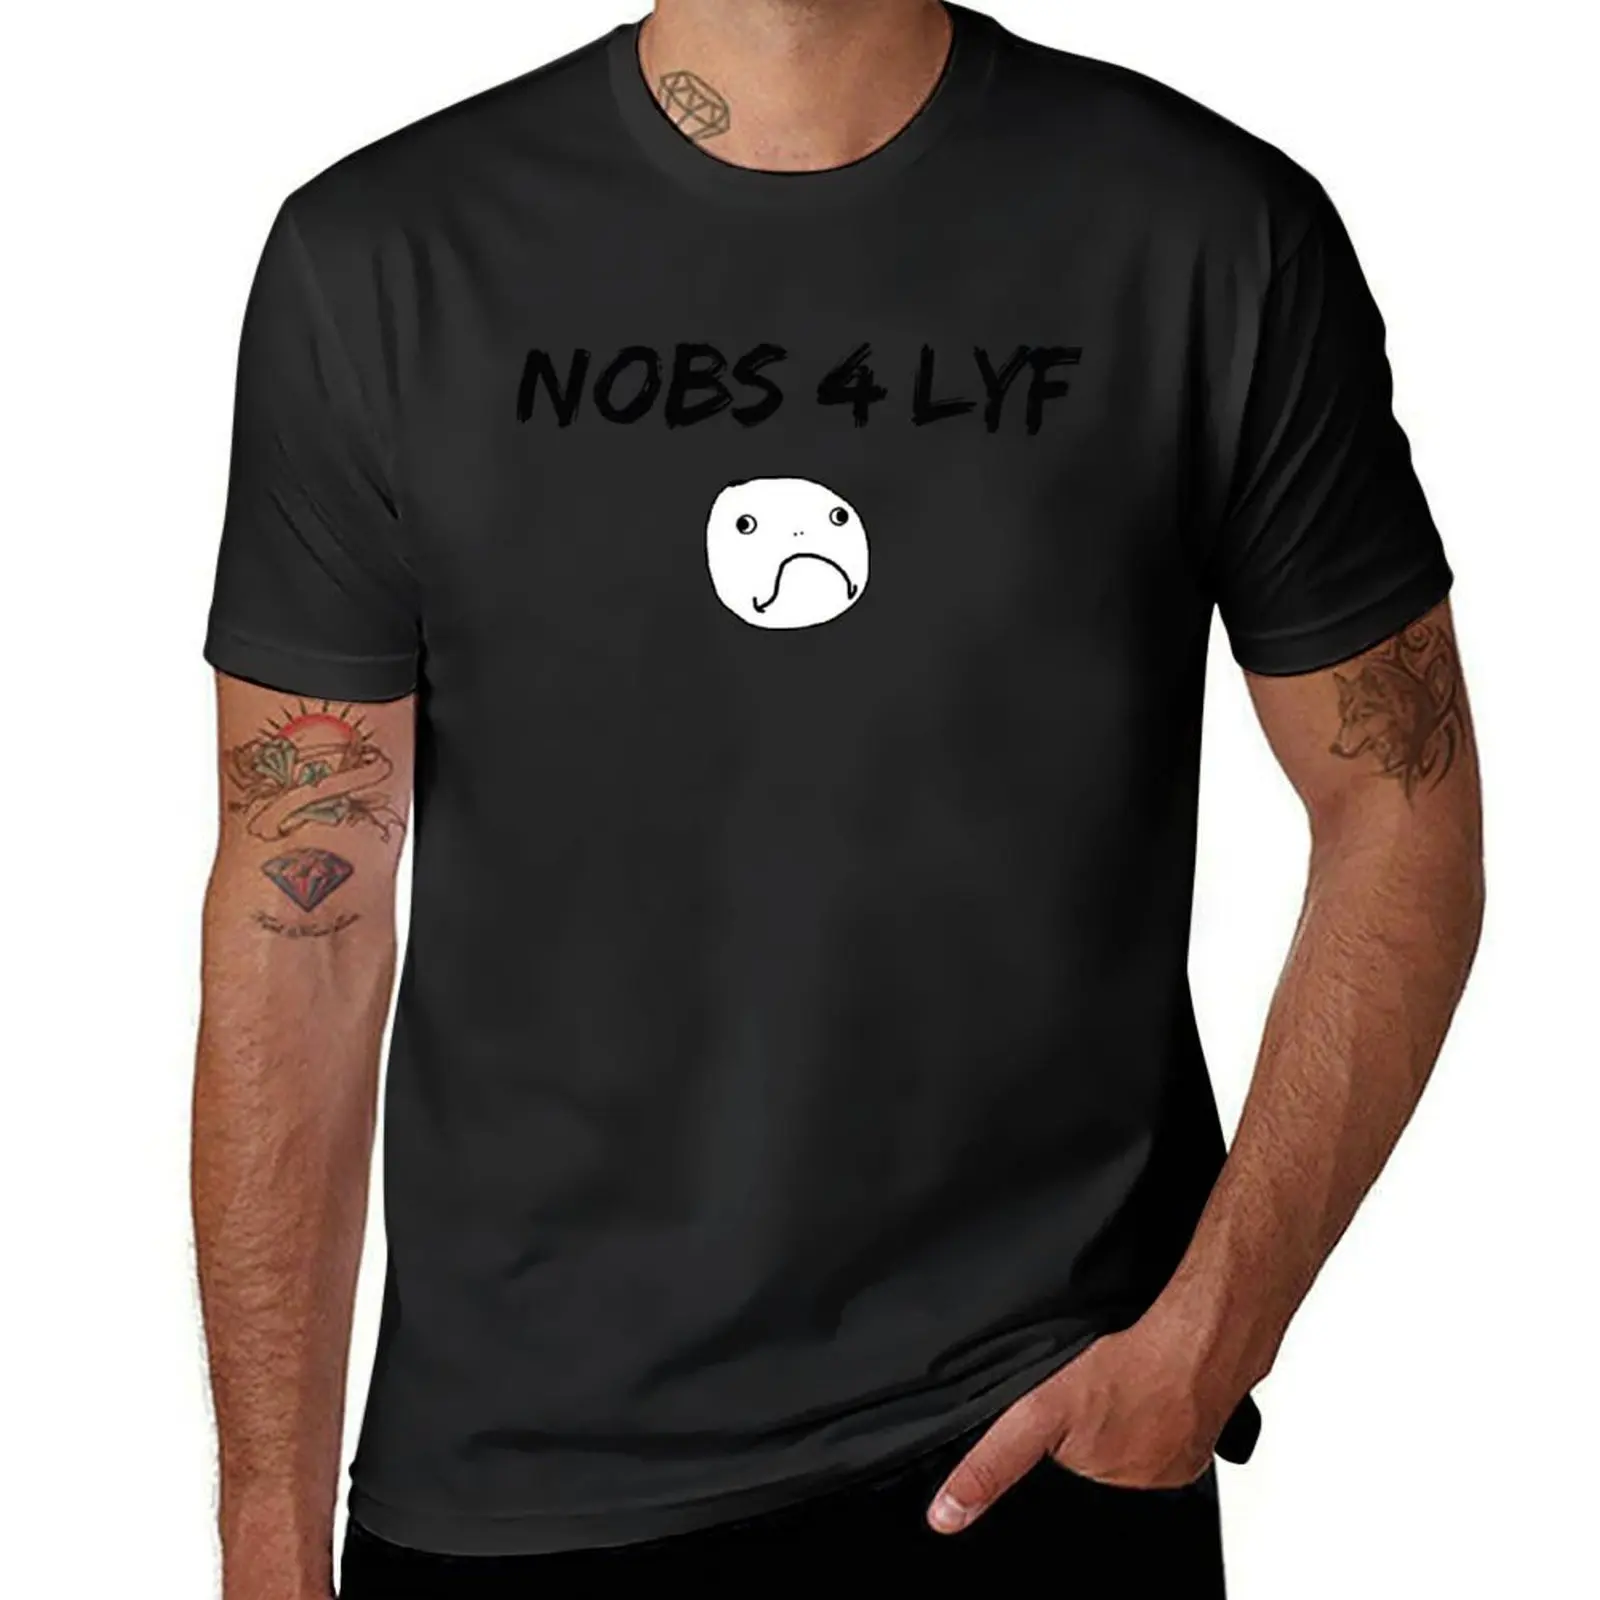 Nobs 4 Lyf T-Shirt Aesthetic clothing animal prinfor boys anime clothes black t-shirts for men